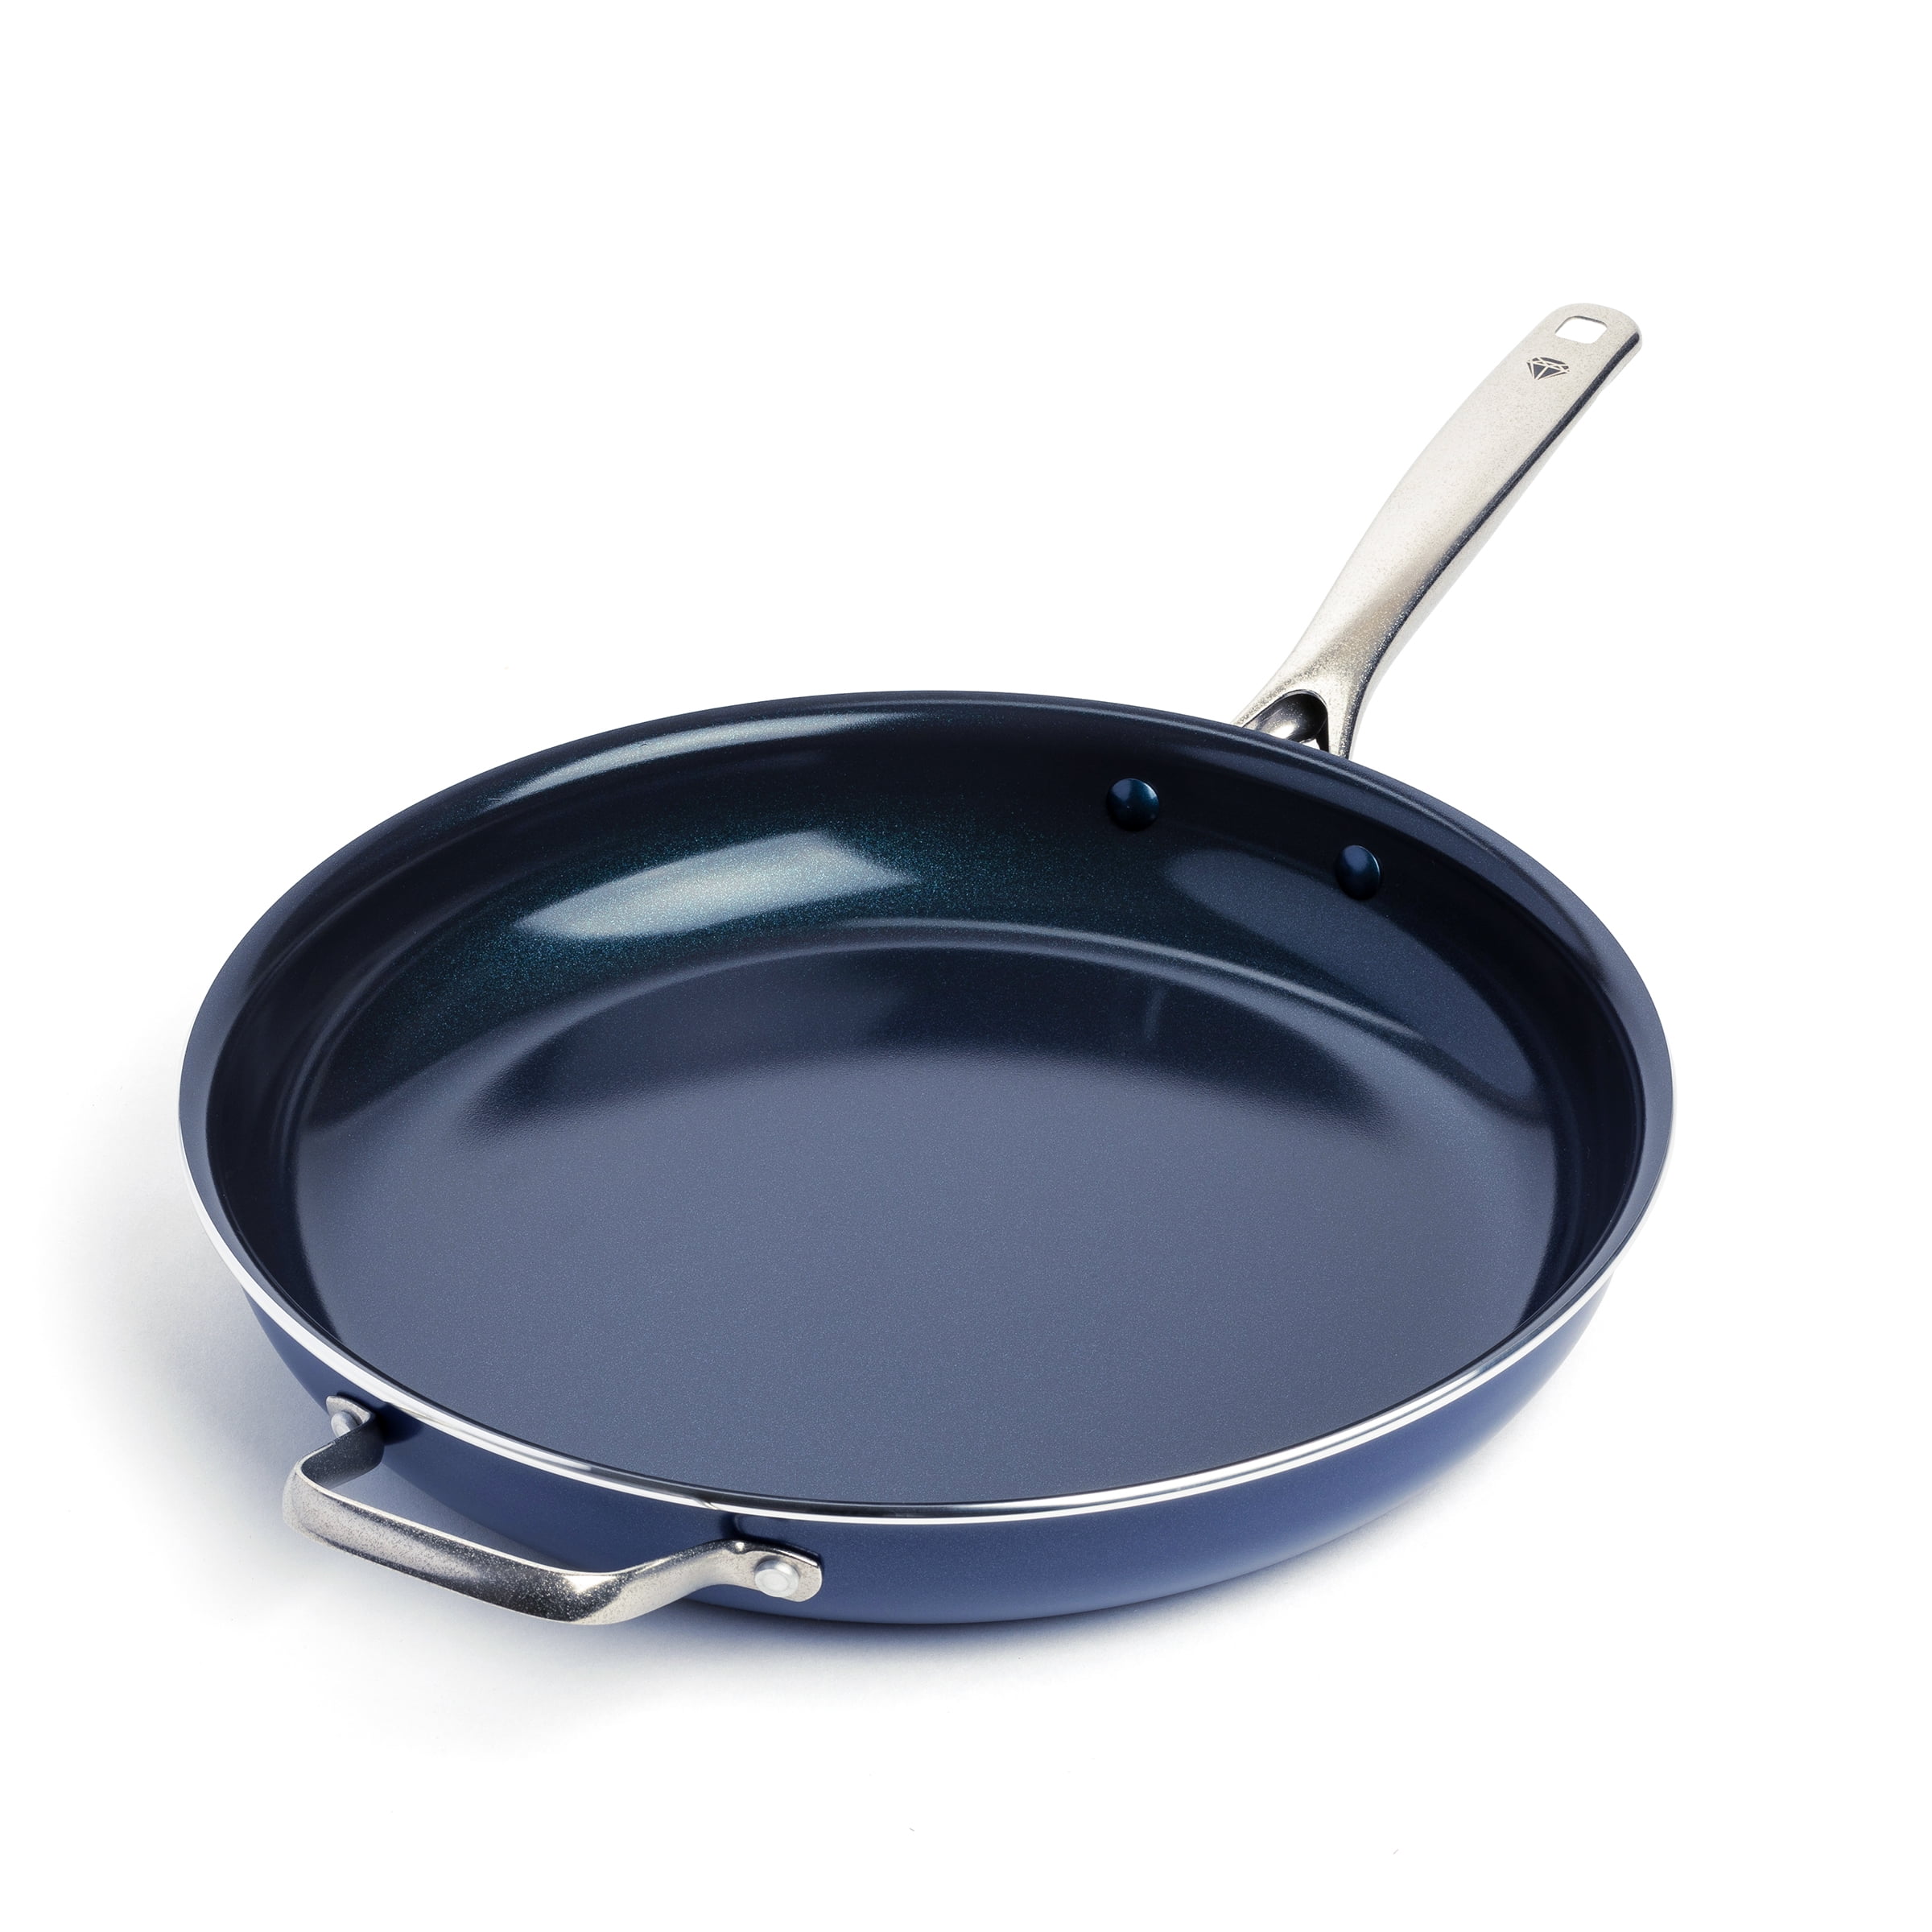 Blue Diamond Ceramic Nonstick Fry Pan/Skillet 8 Inch Frypan Home